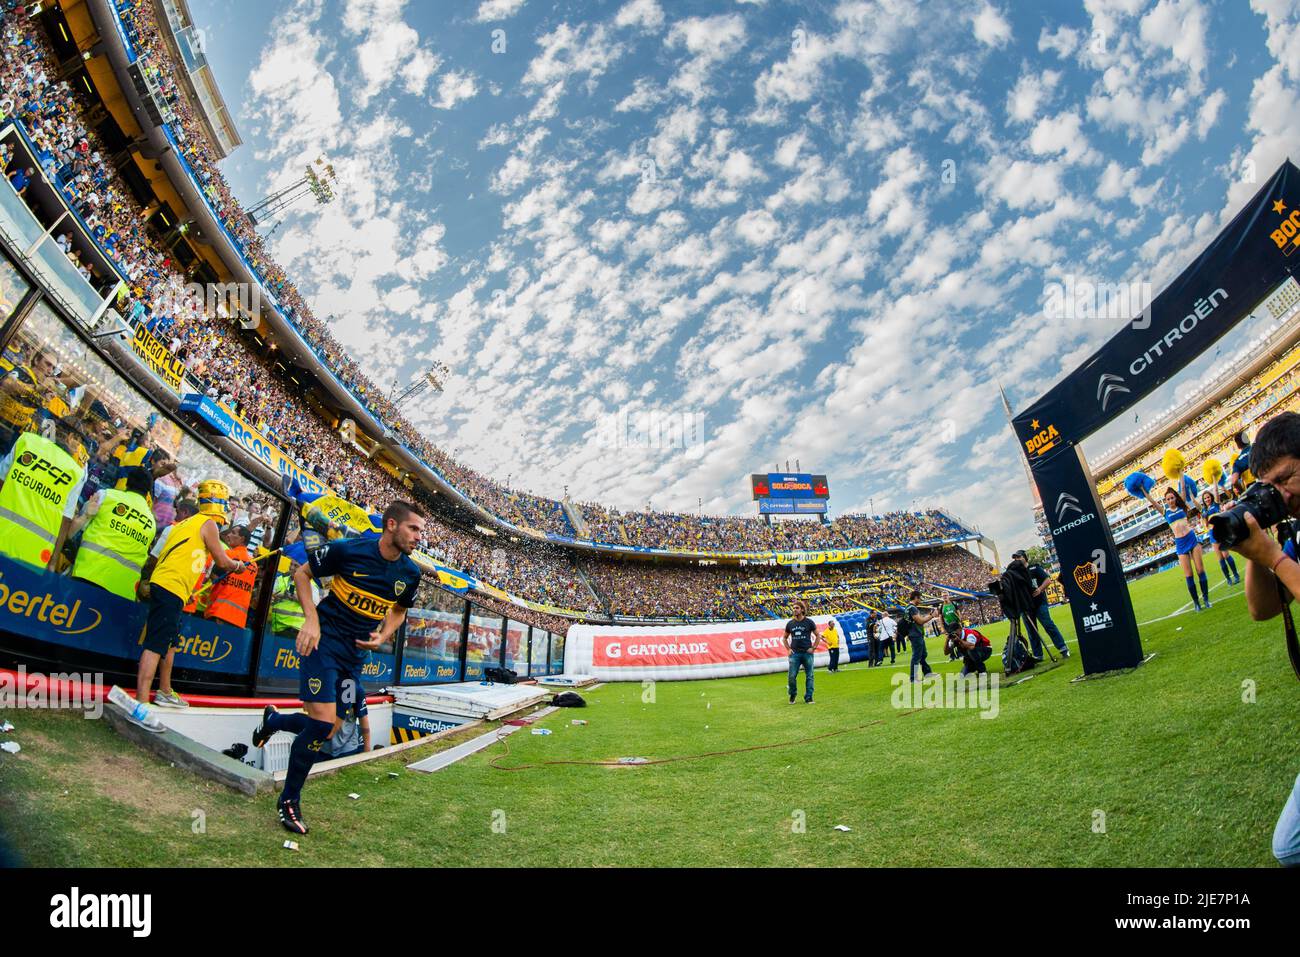 Fernando Gago step up at the field at La Bombonera Stadium to play for Boca Juniors, local team. Stock Photo